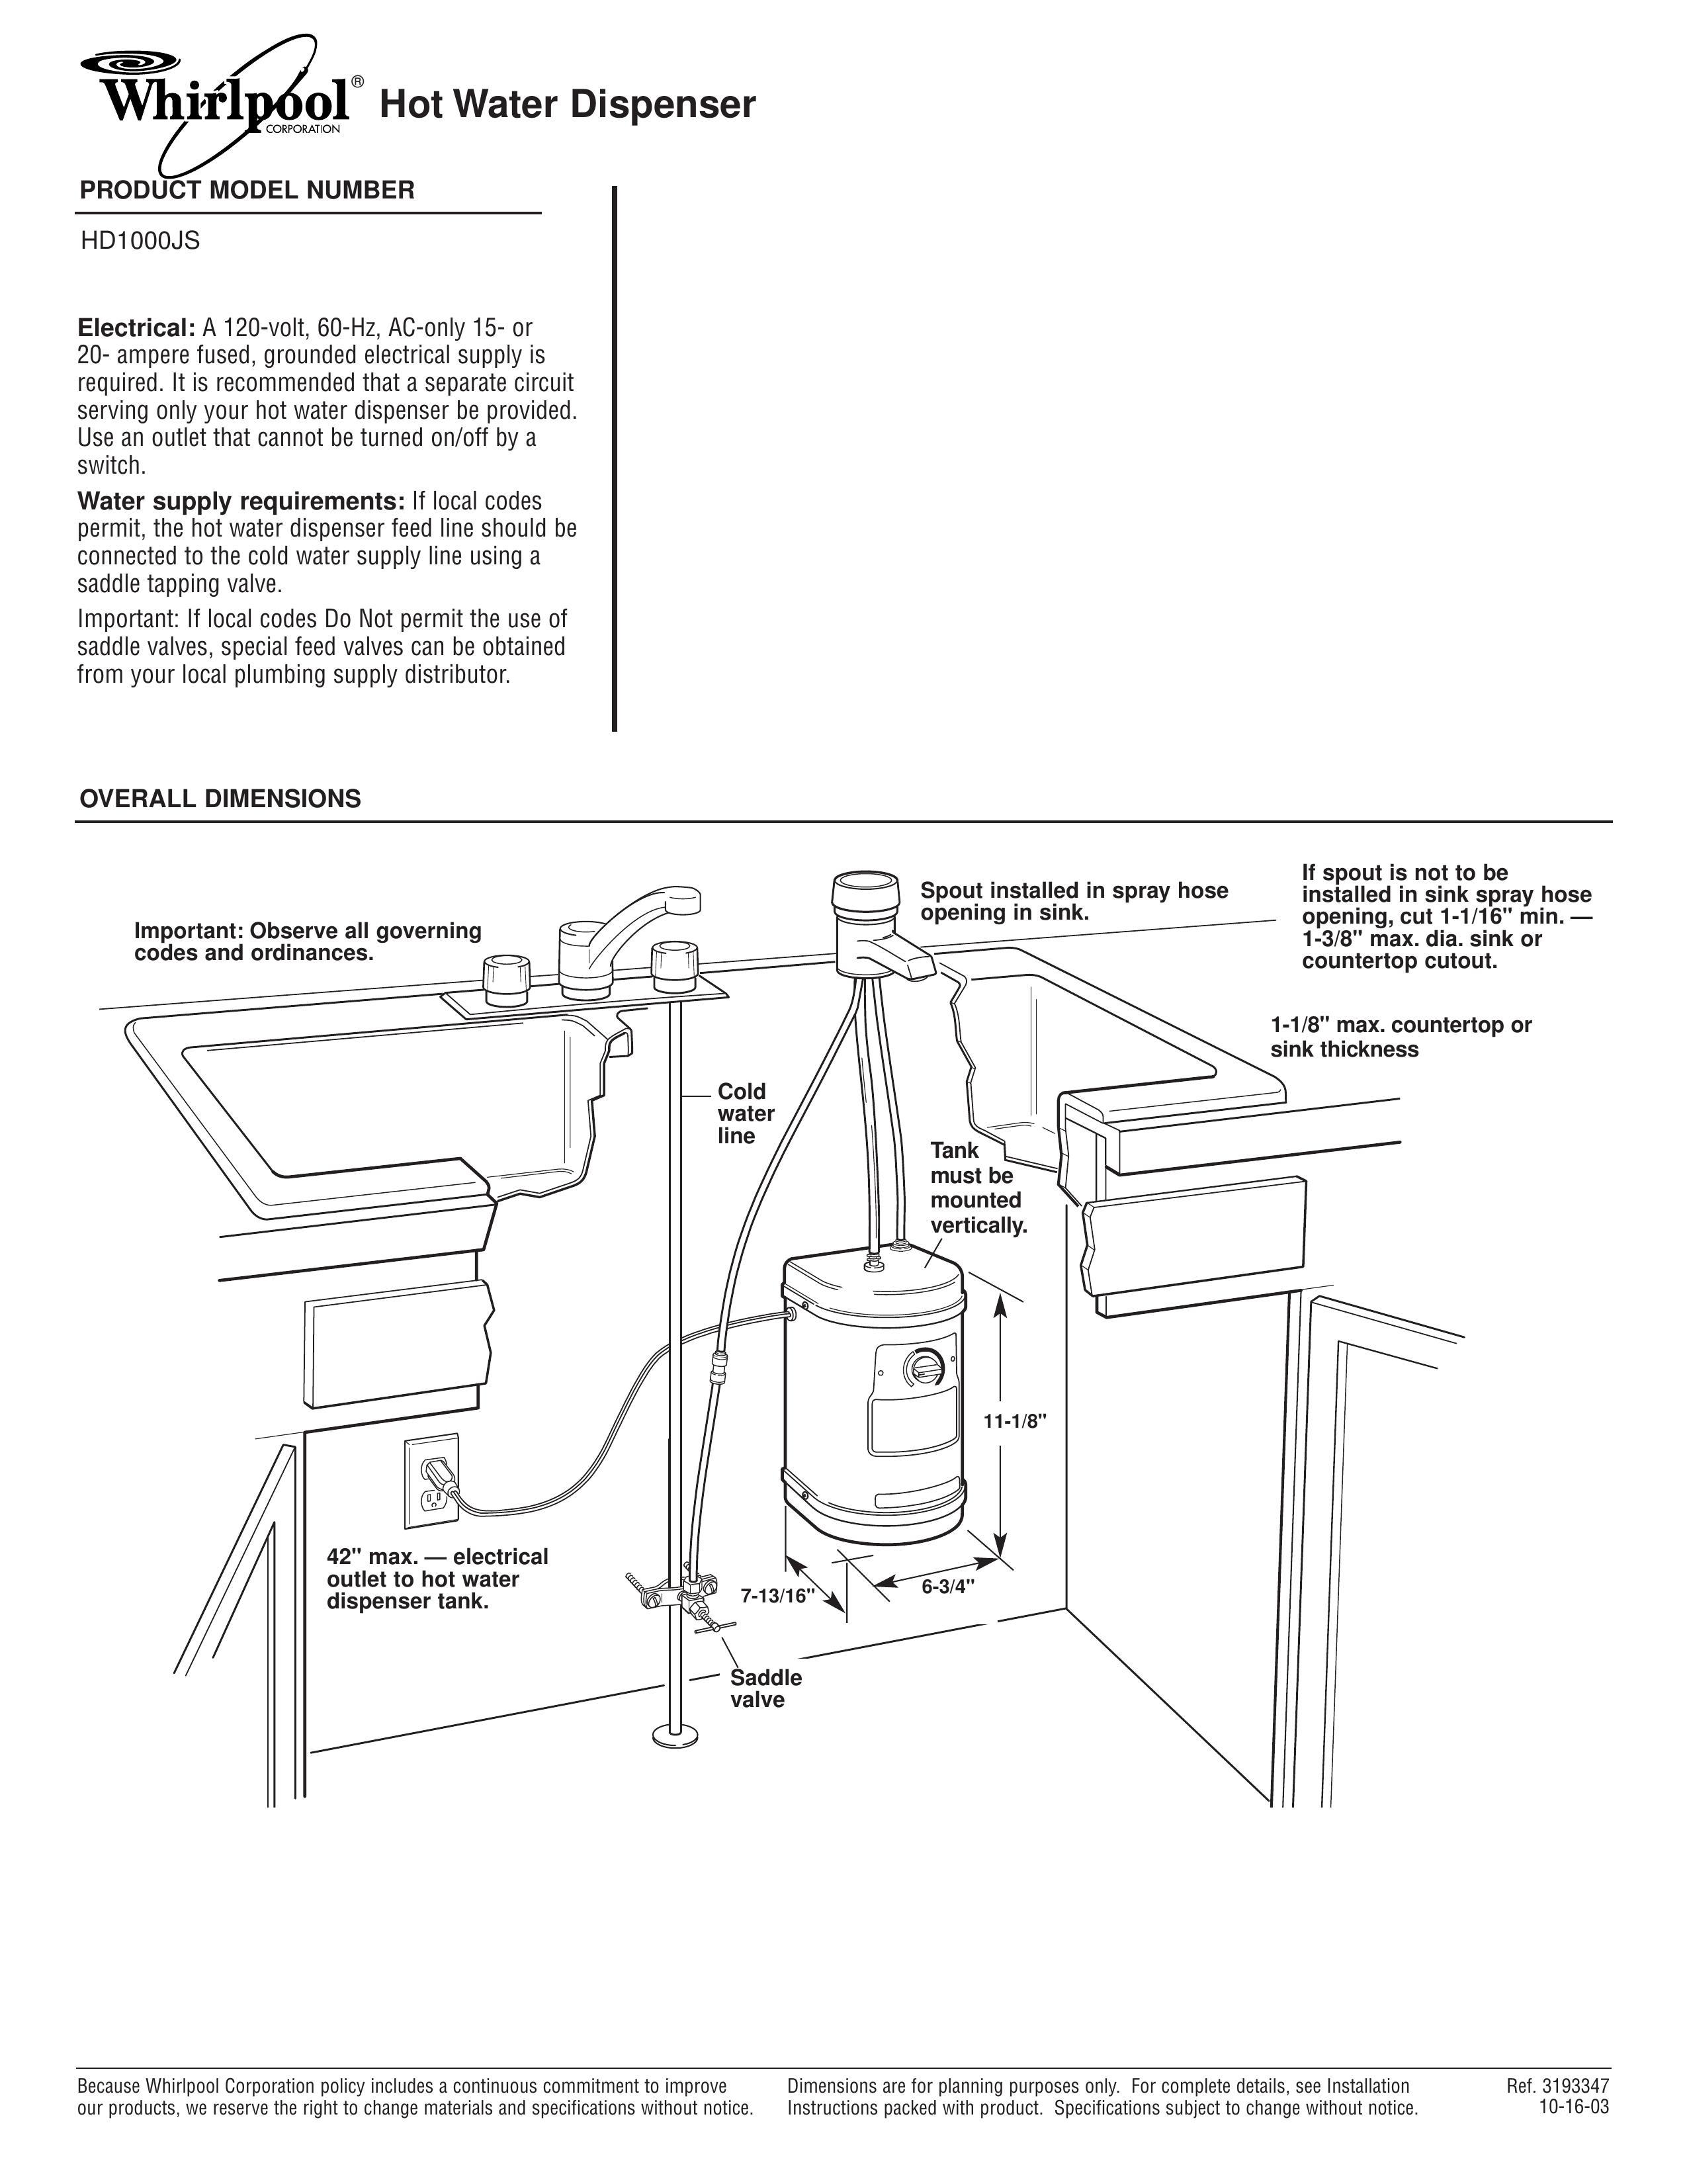 Whirlpool HD1000JS Water Dispenser User Manual